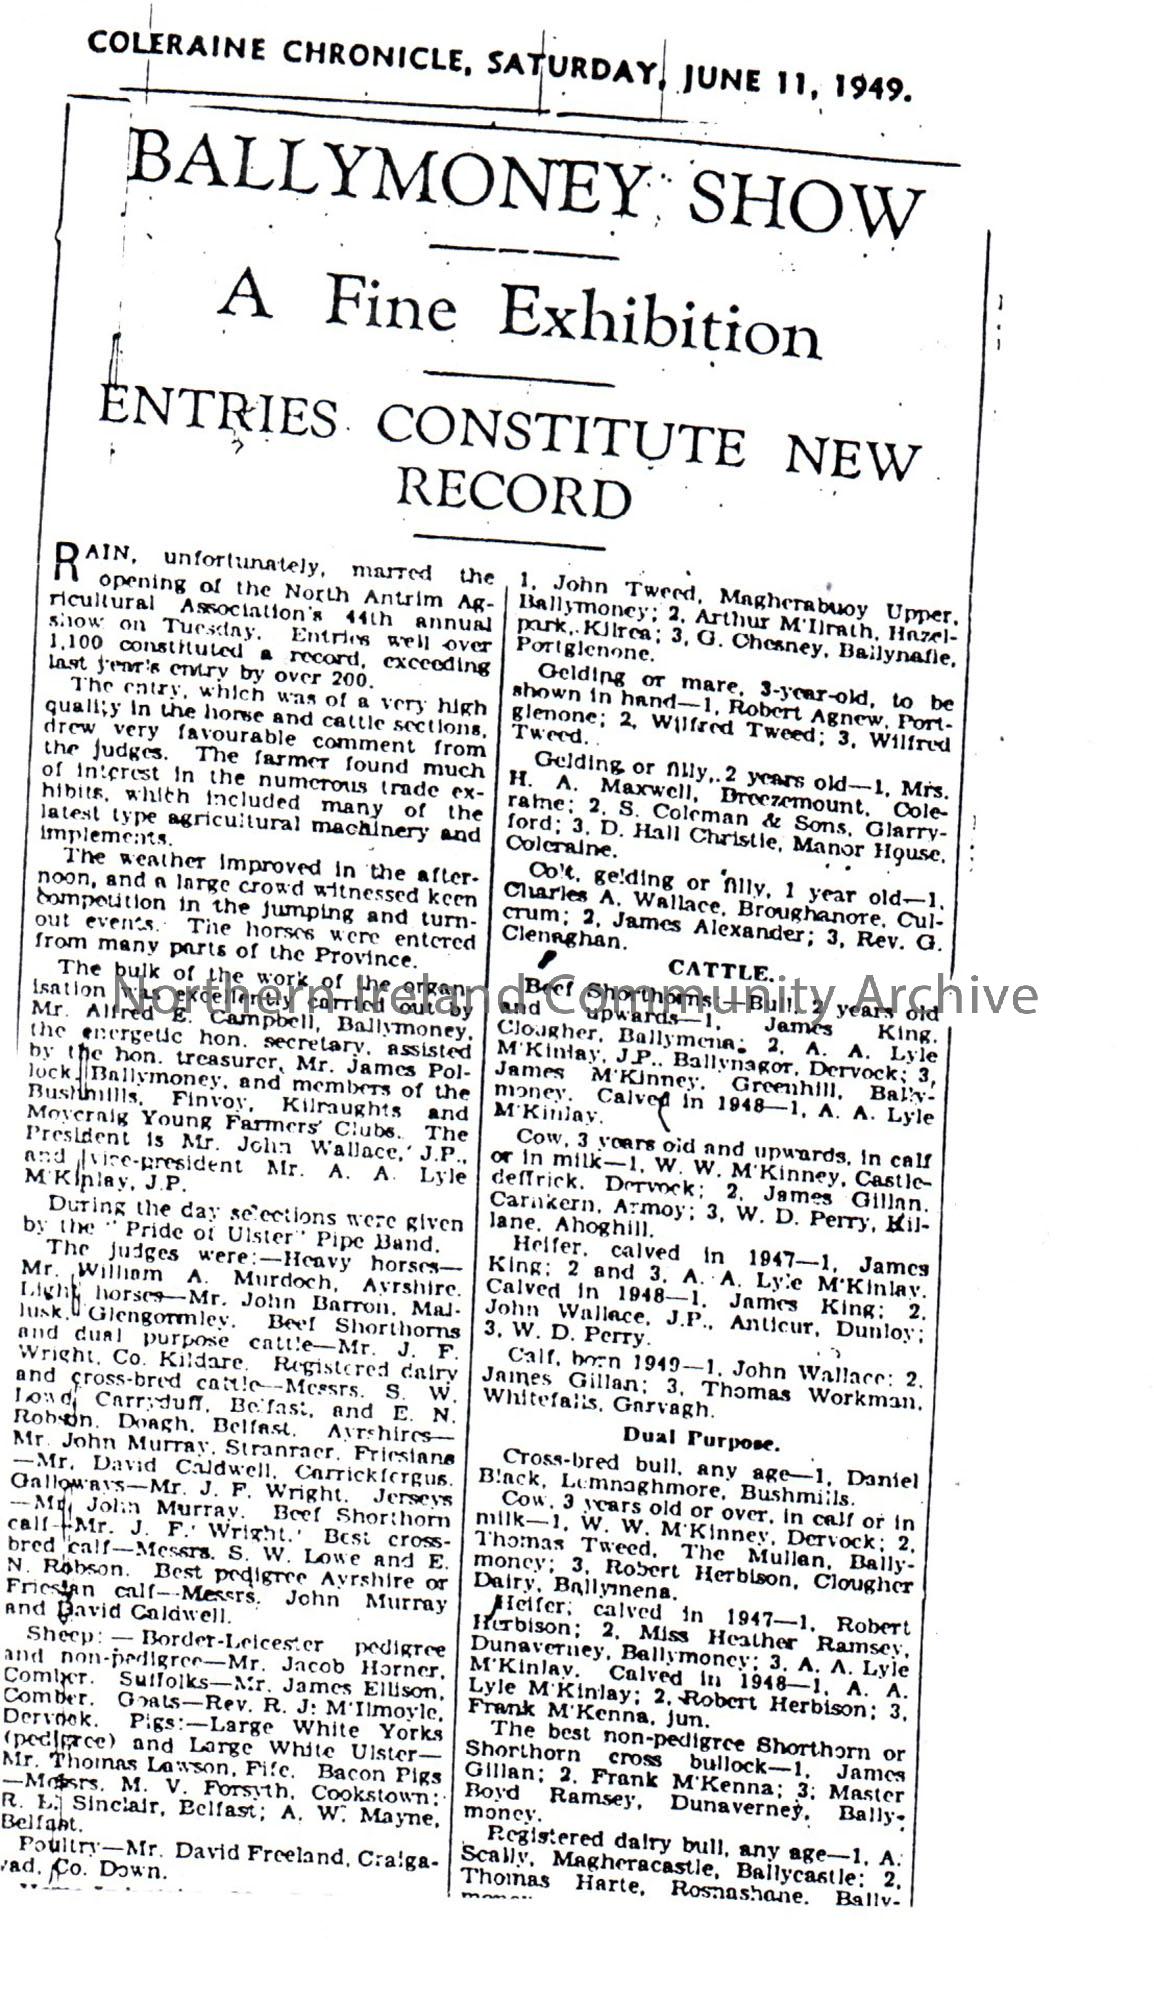 Coleraine chronicle, Saturday, June 11, 1949, Ballymoney Show, A fine exhibition, Entries constitute new record.